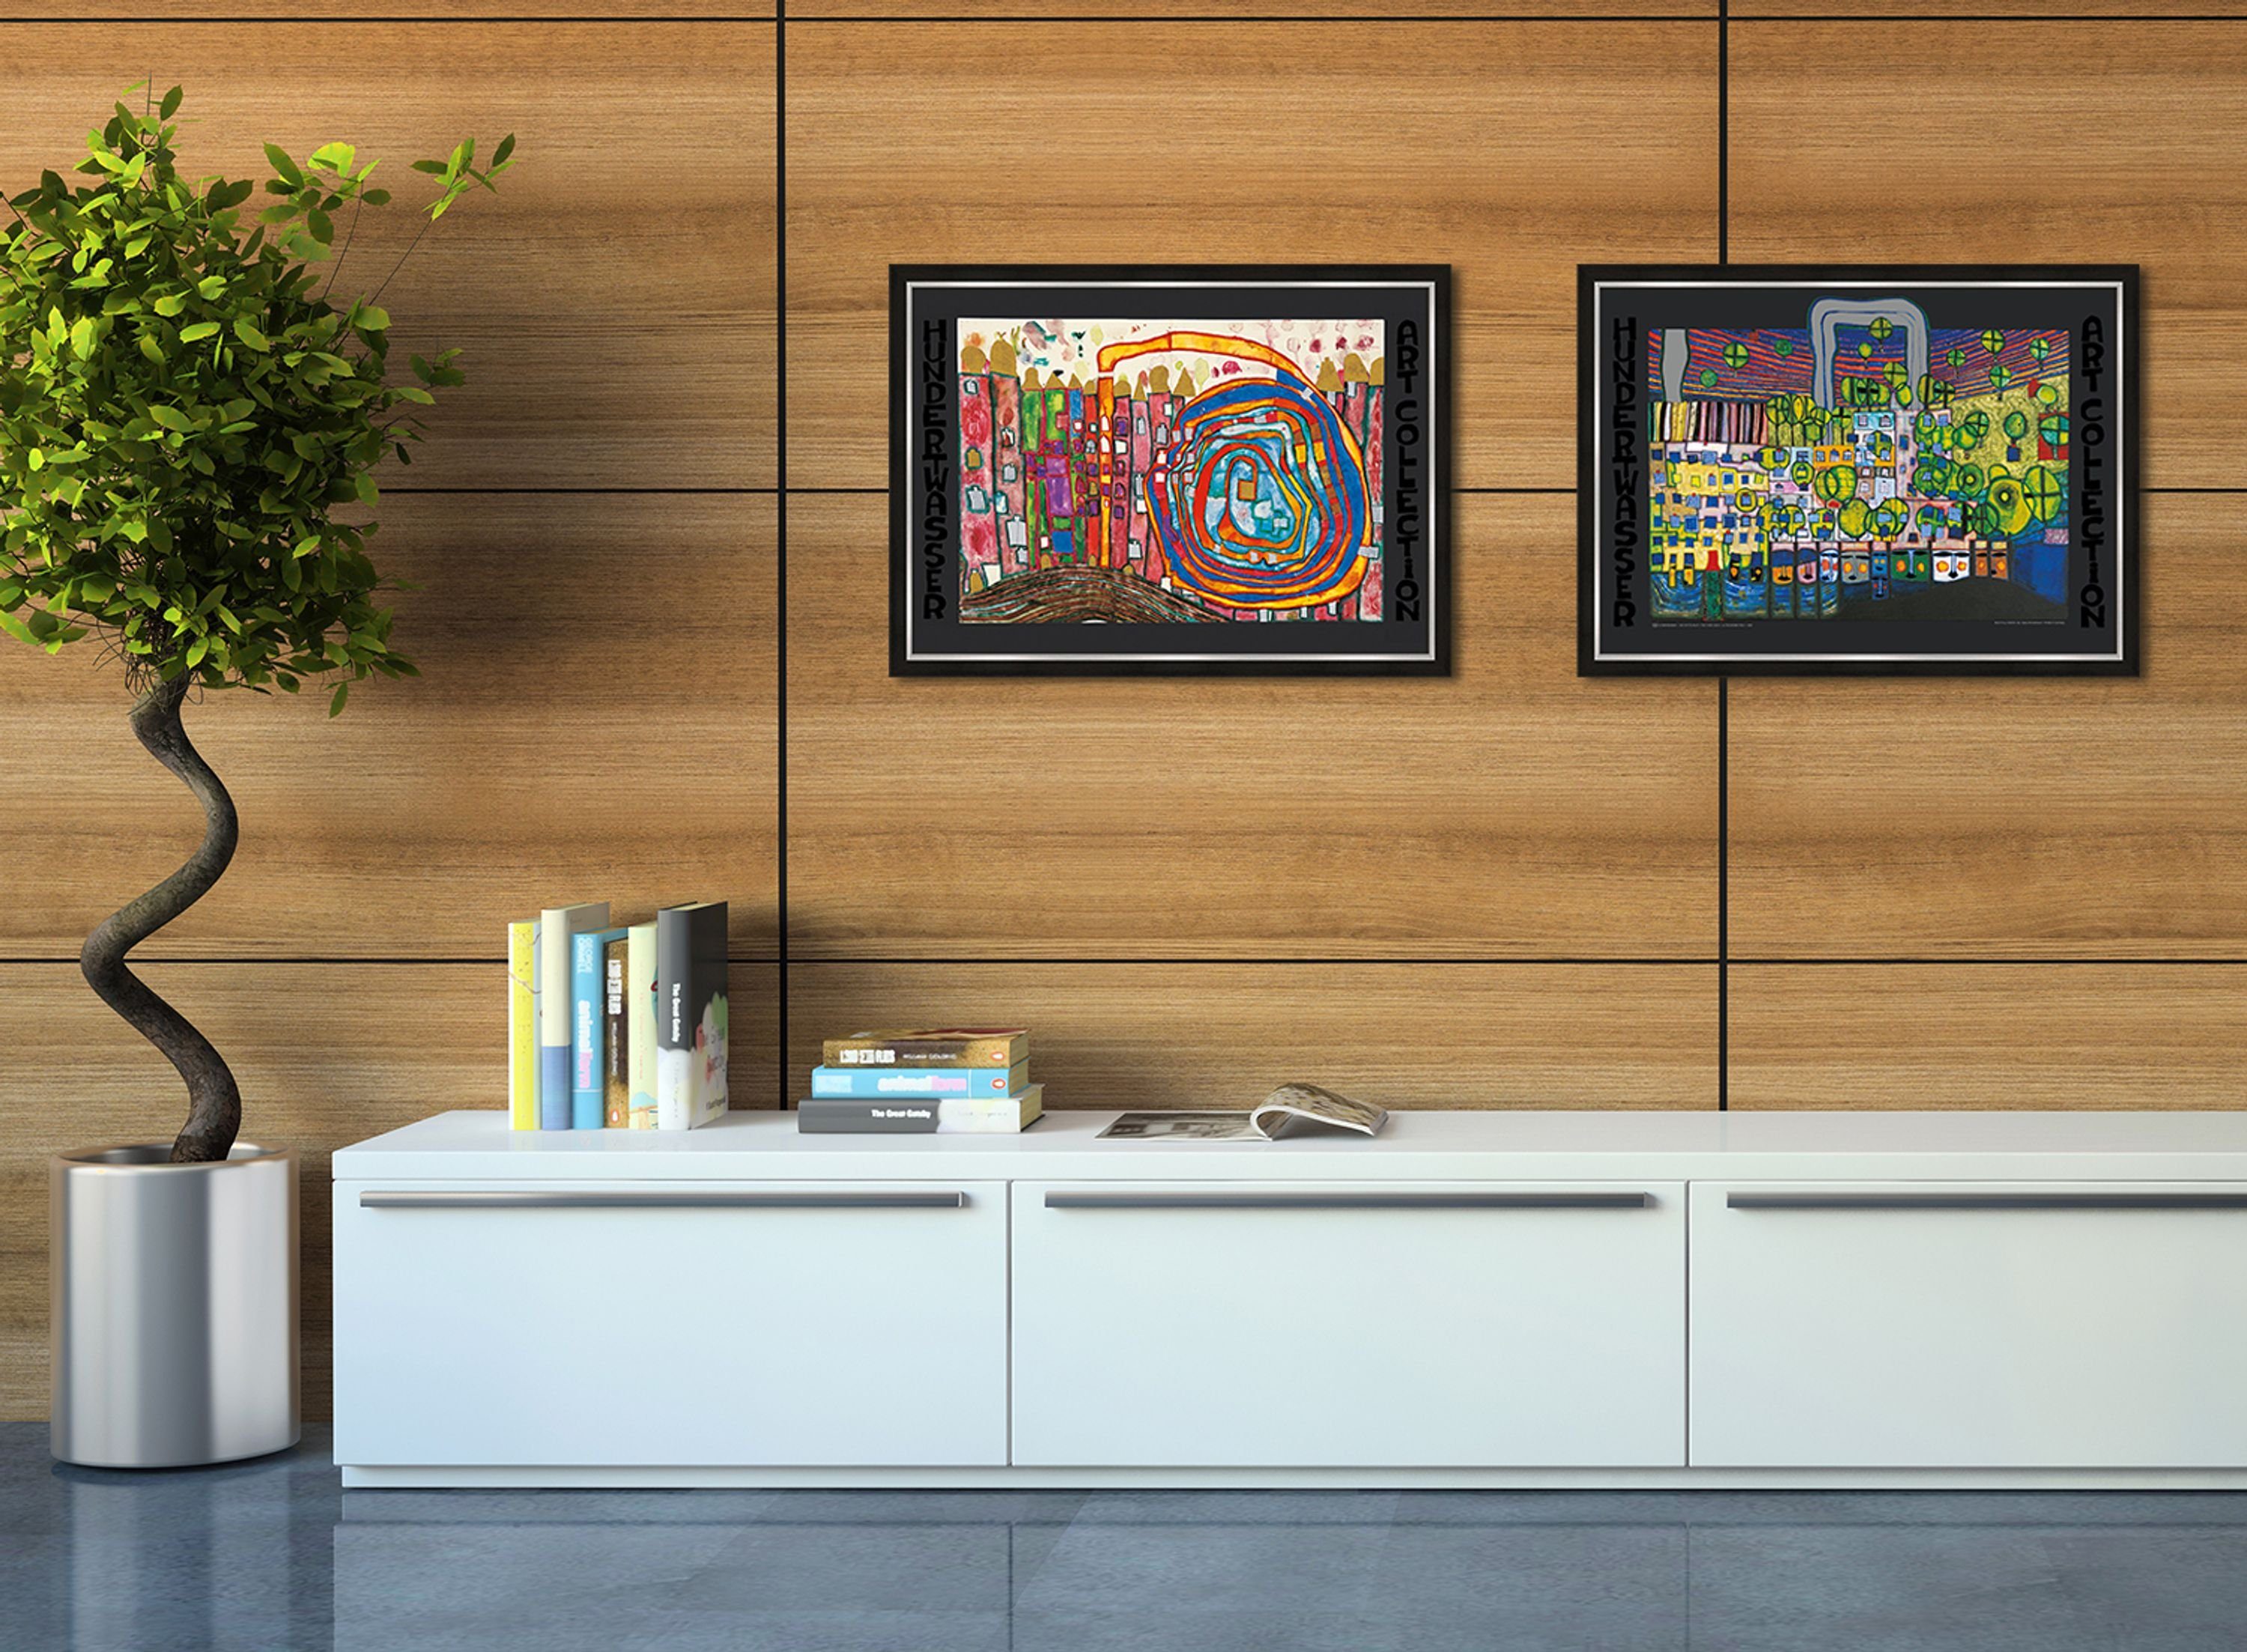 Rahmen gerahmt Poster Bild artissimo Hundertwasser mit 72x53cm / mit / Wandbild Rahmen Bild